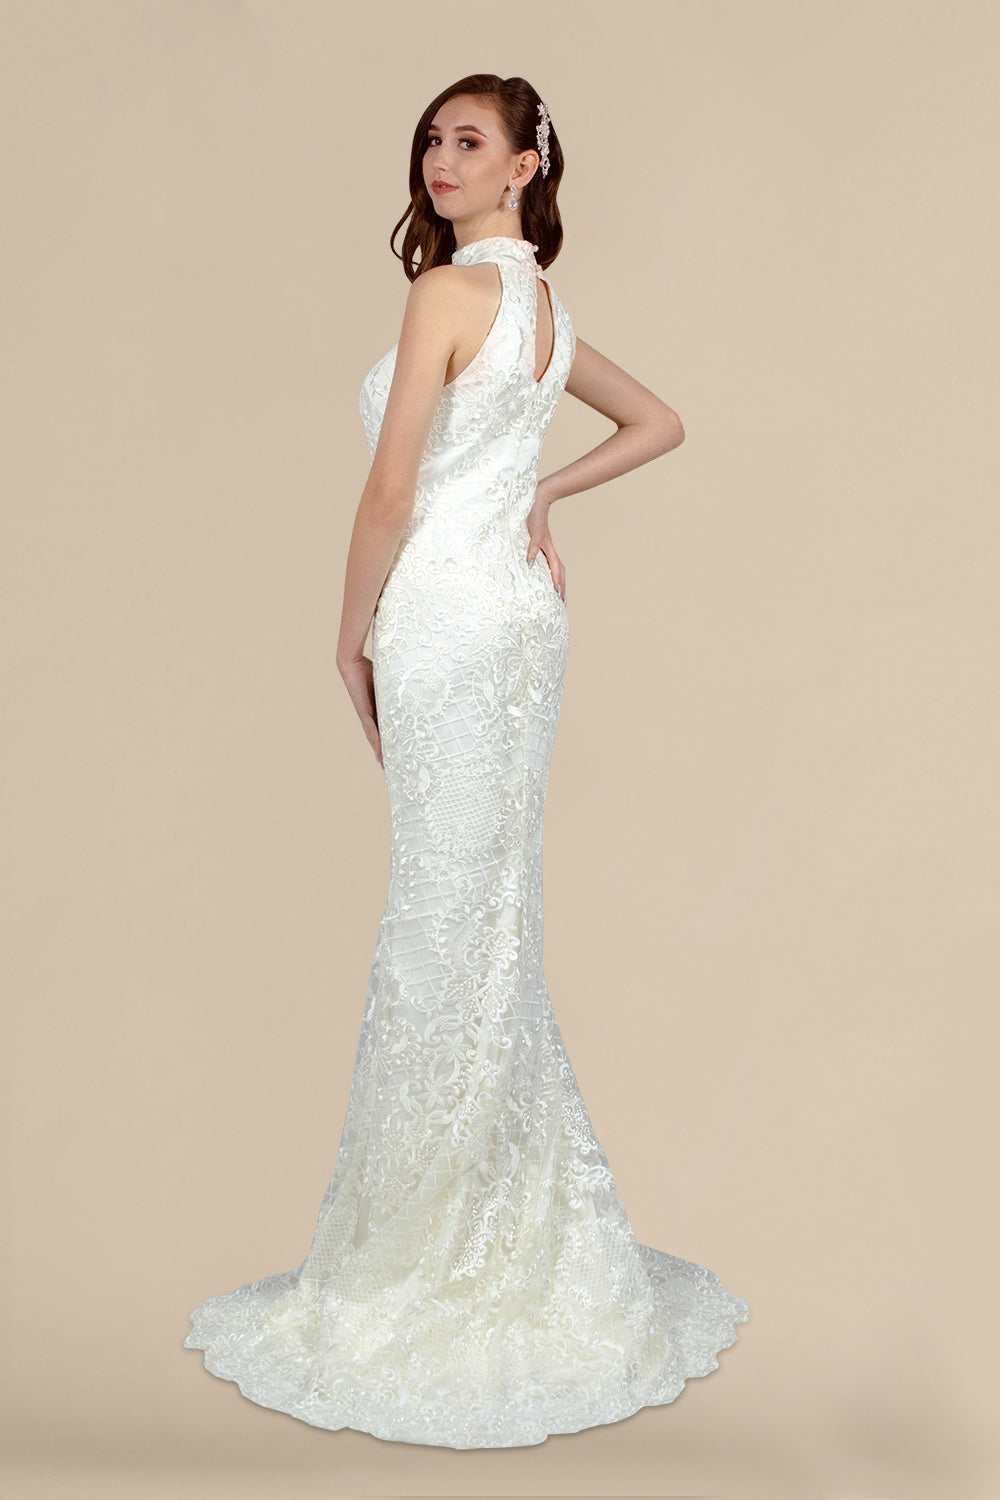 lace wedding gowns custom made bridal dressmaker perth australia online envious bridal & formal